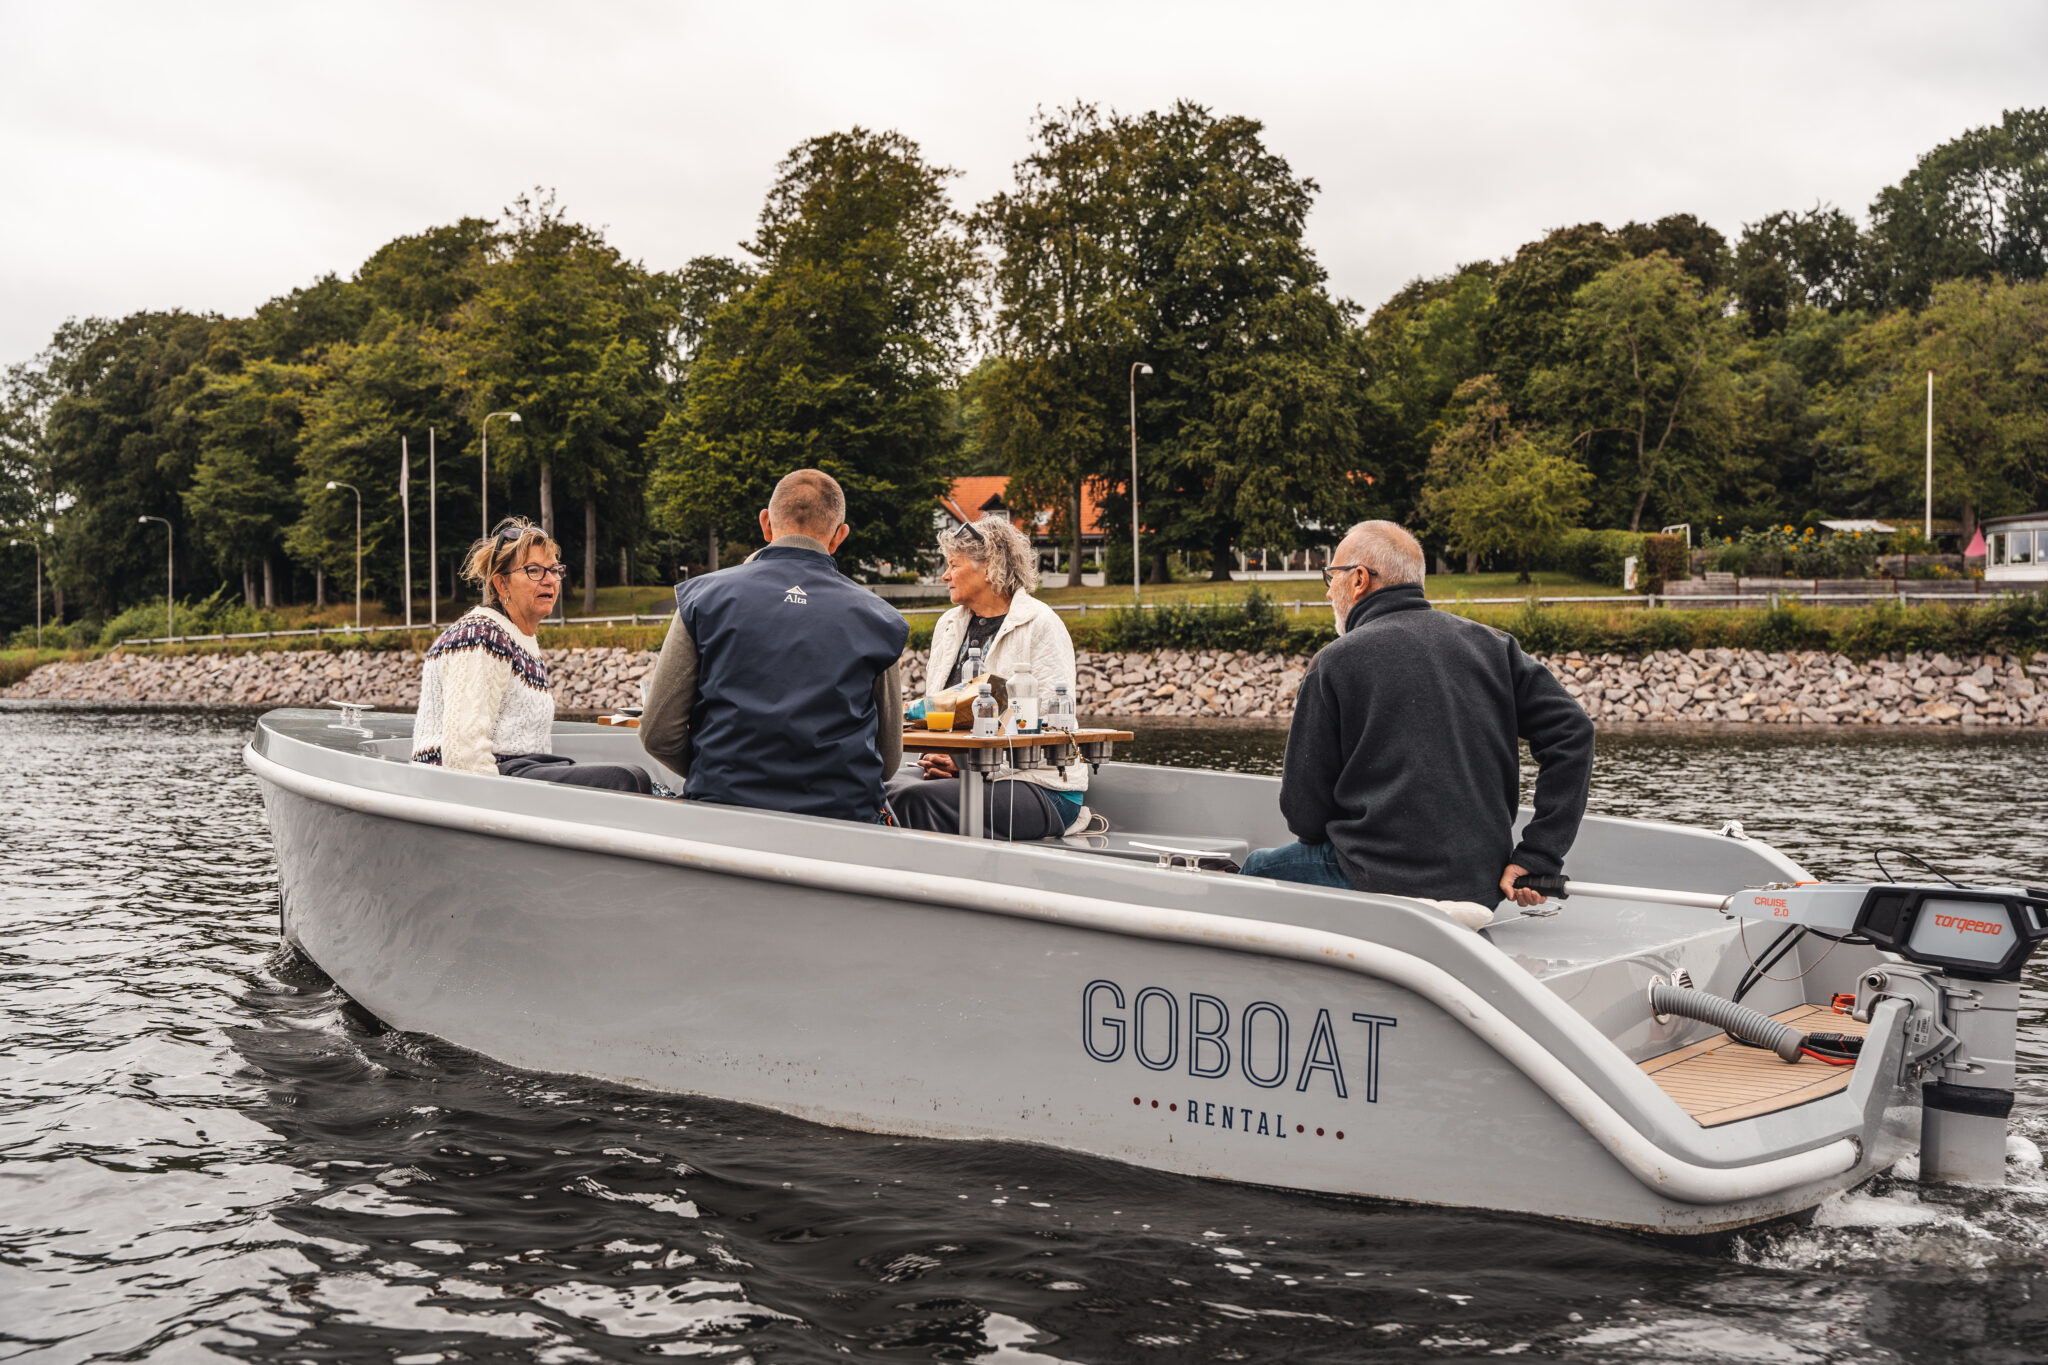 GoBoat around the world - GoBoat Denmark